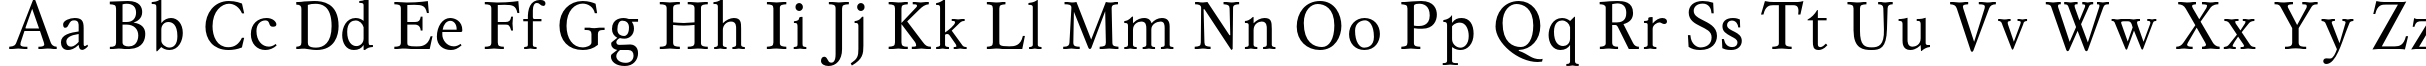 Пример написания английского алфавита шрифтом MyslC